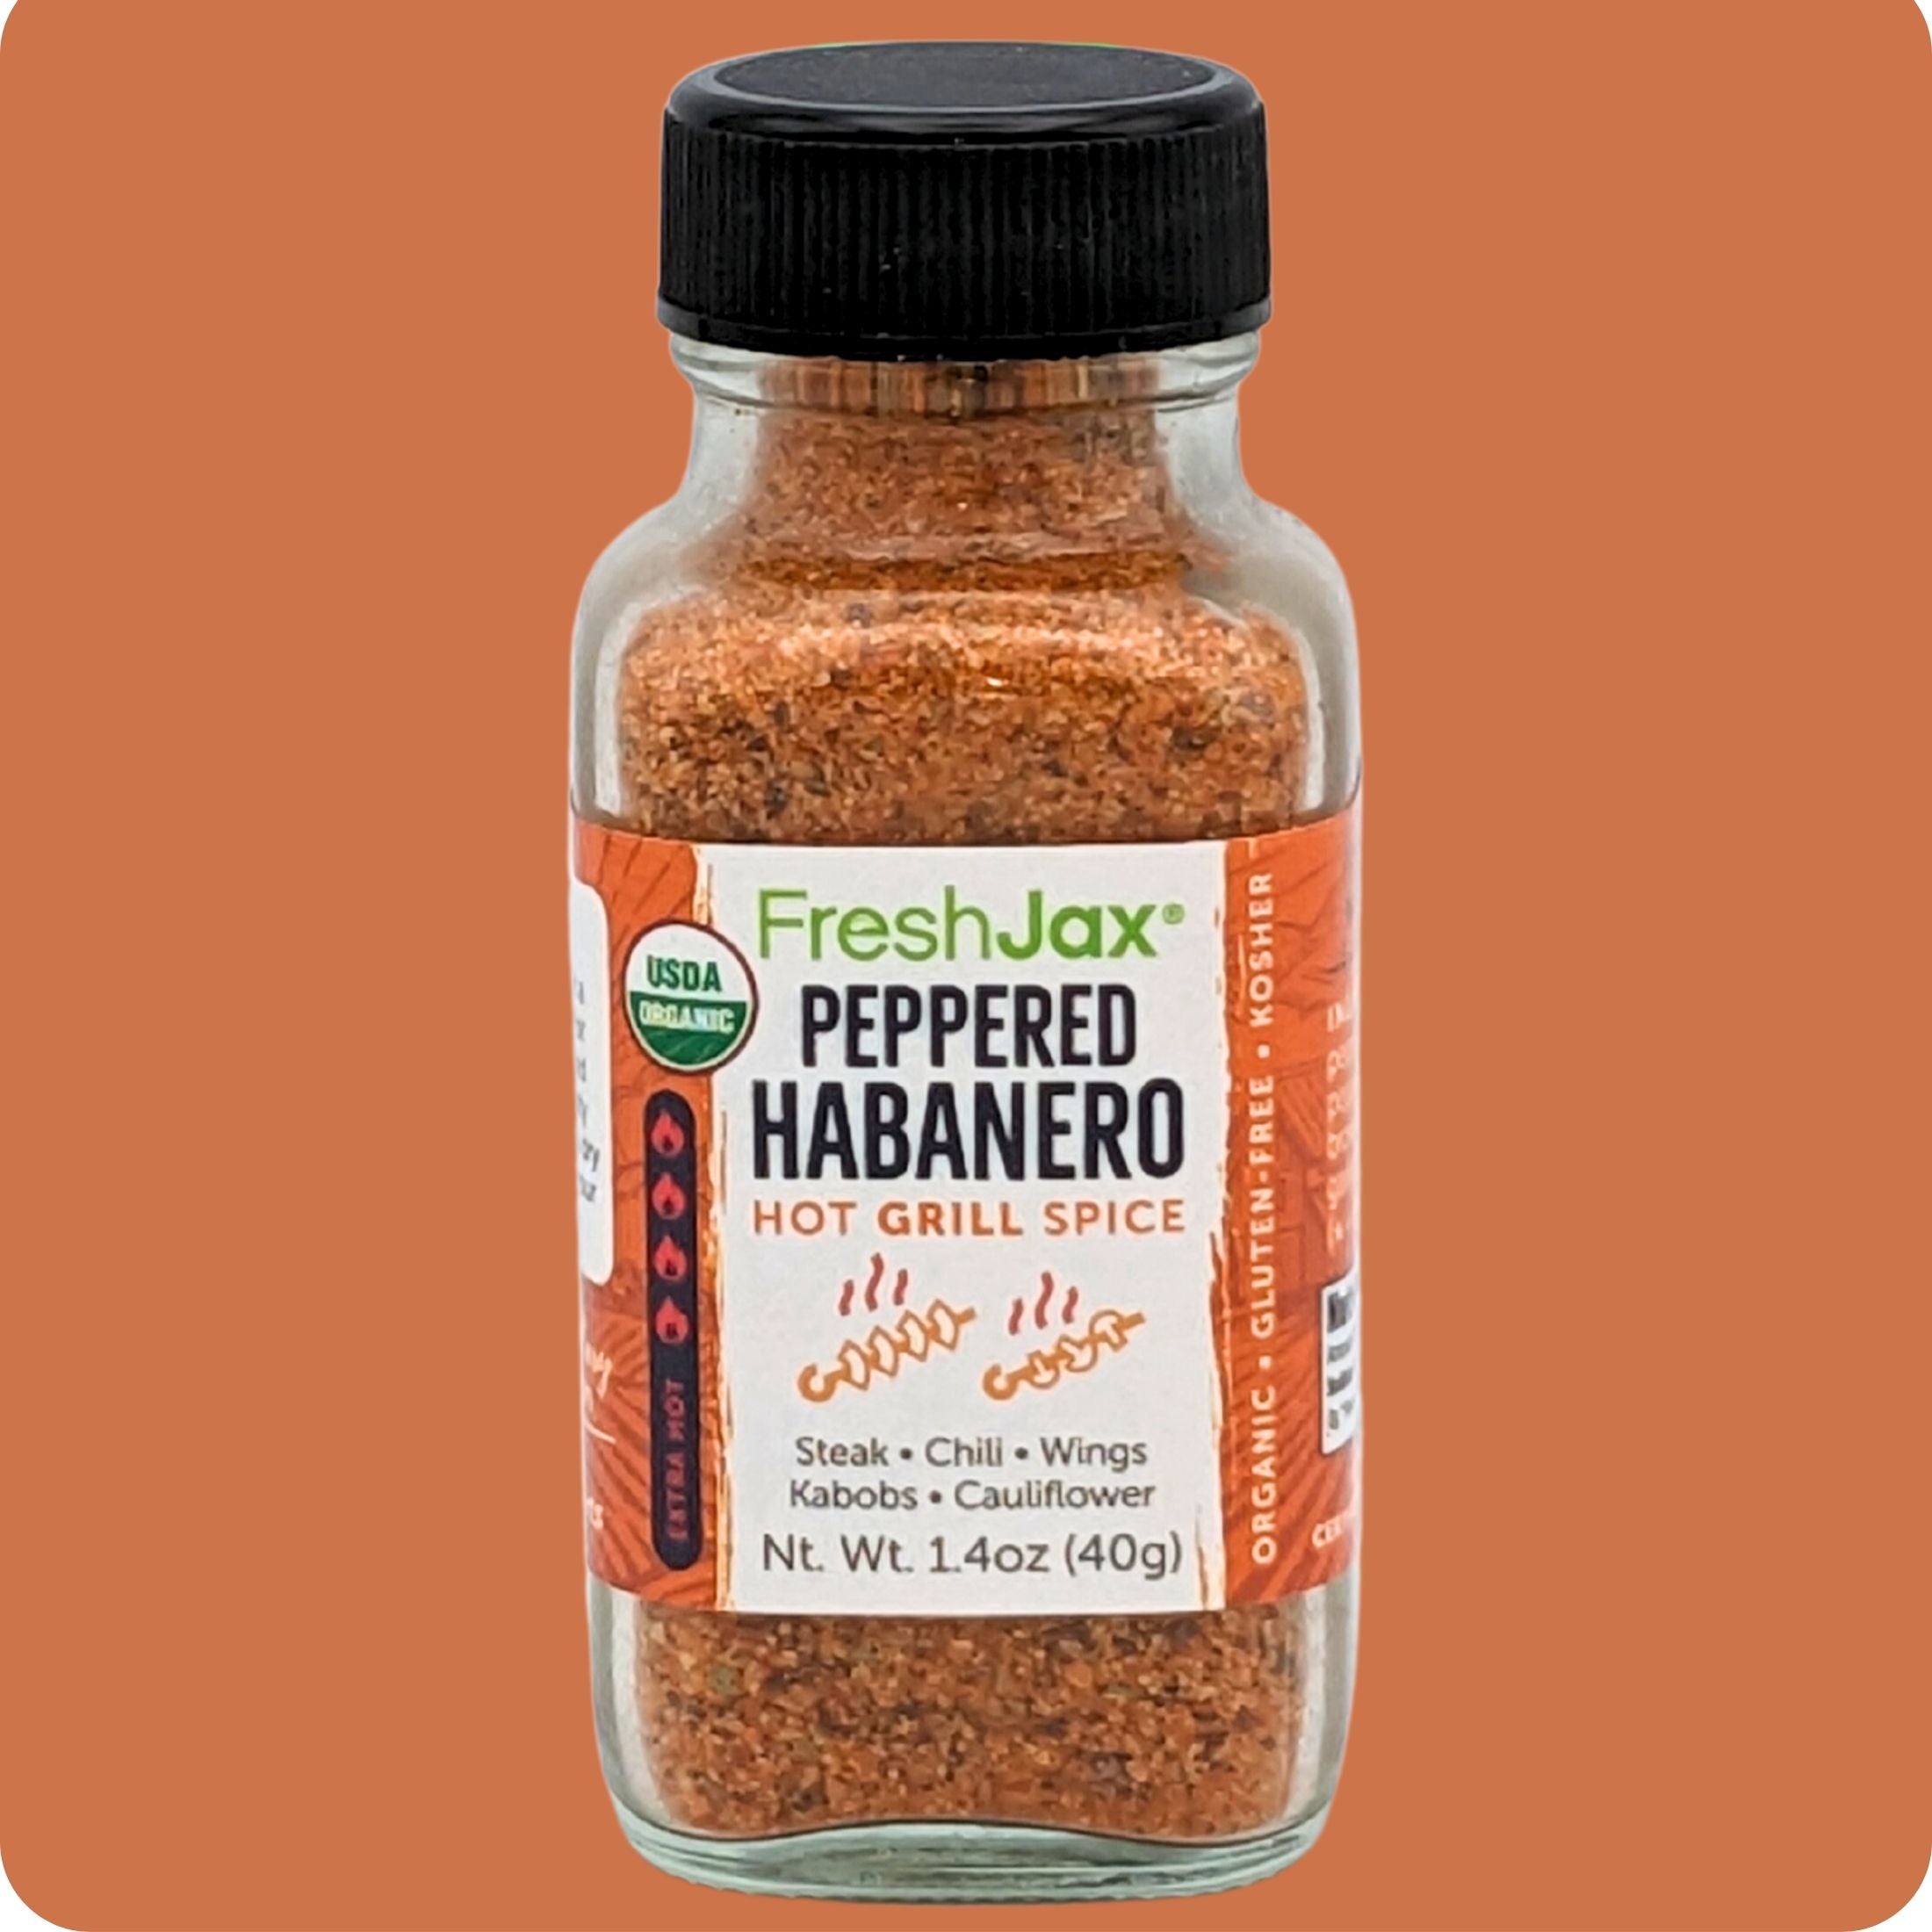 Peppered Habanero Hot Grill Spice Sampler